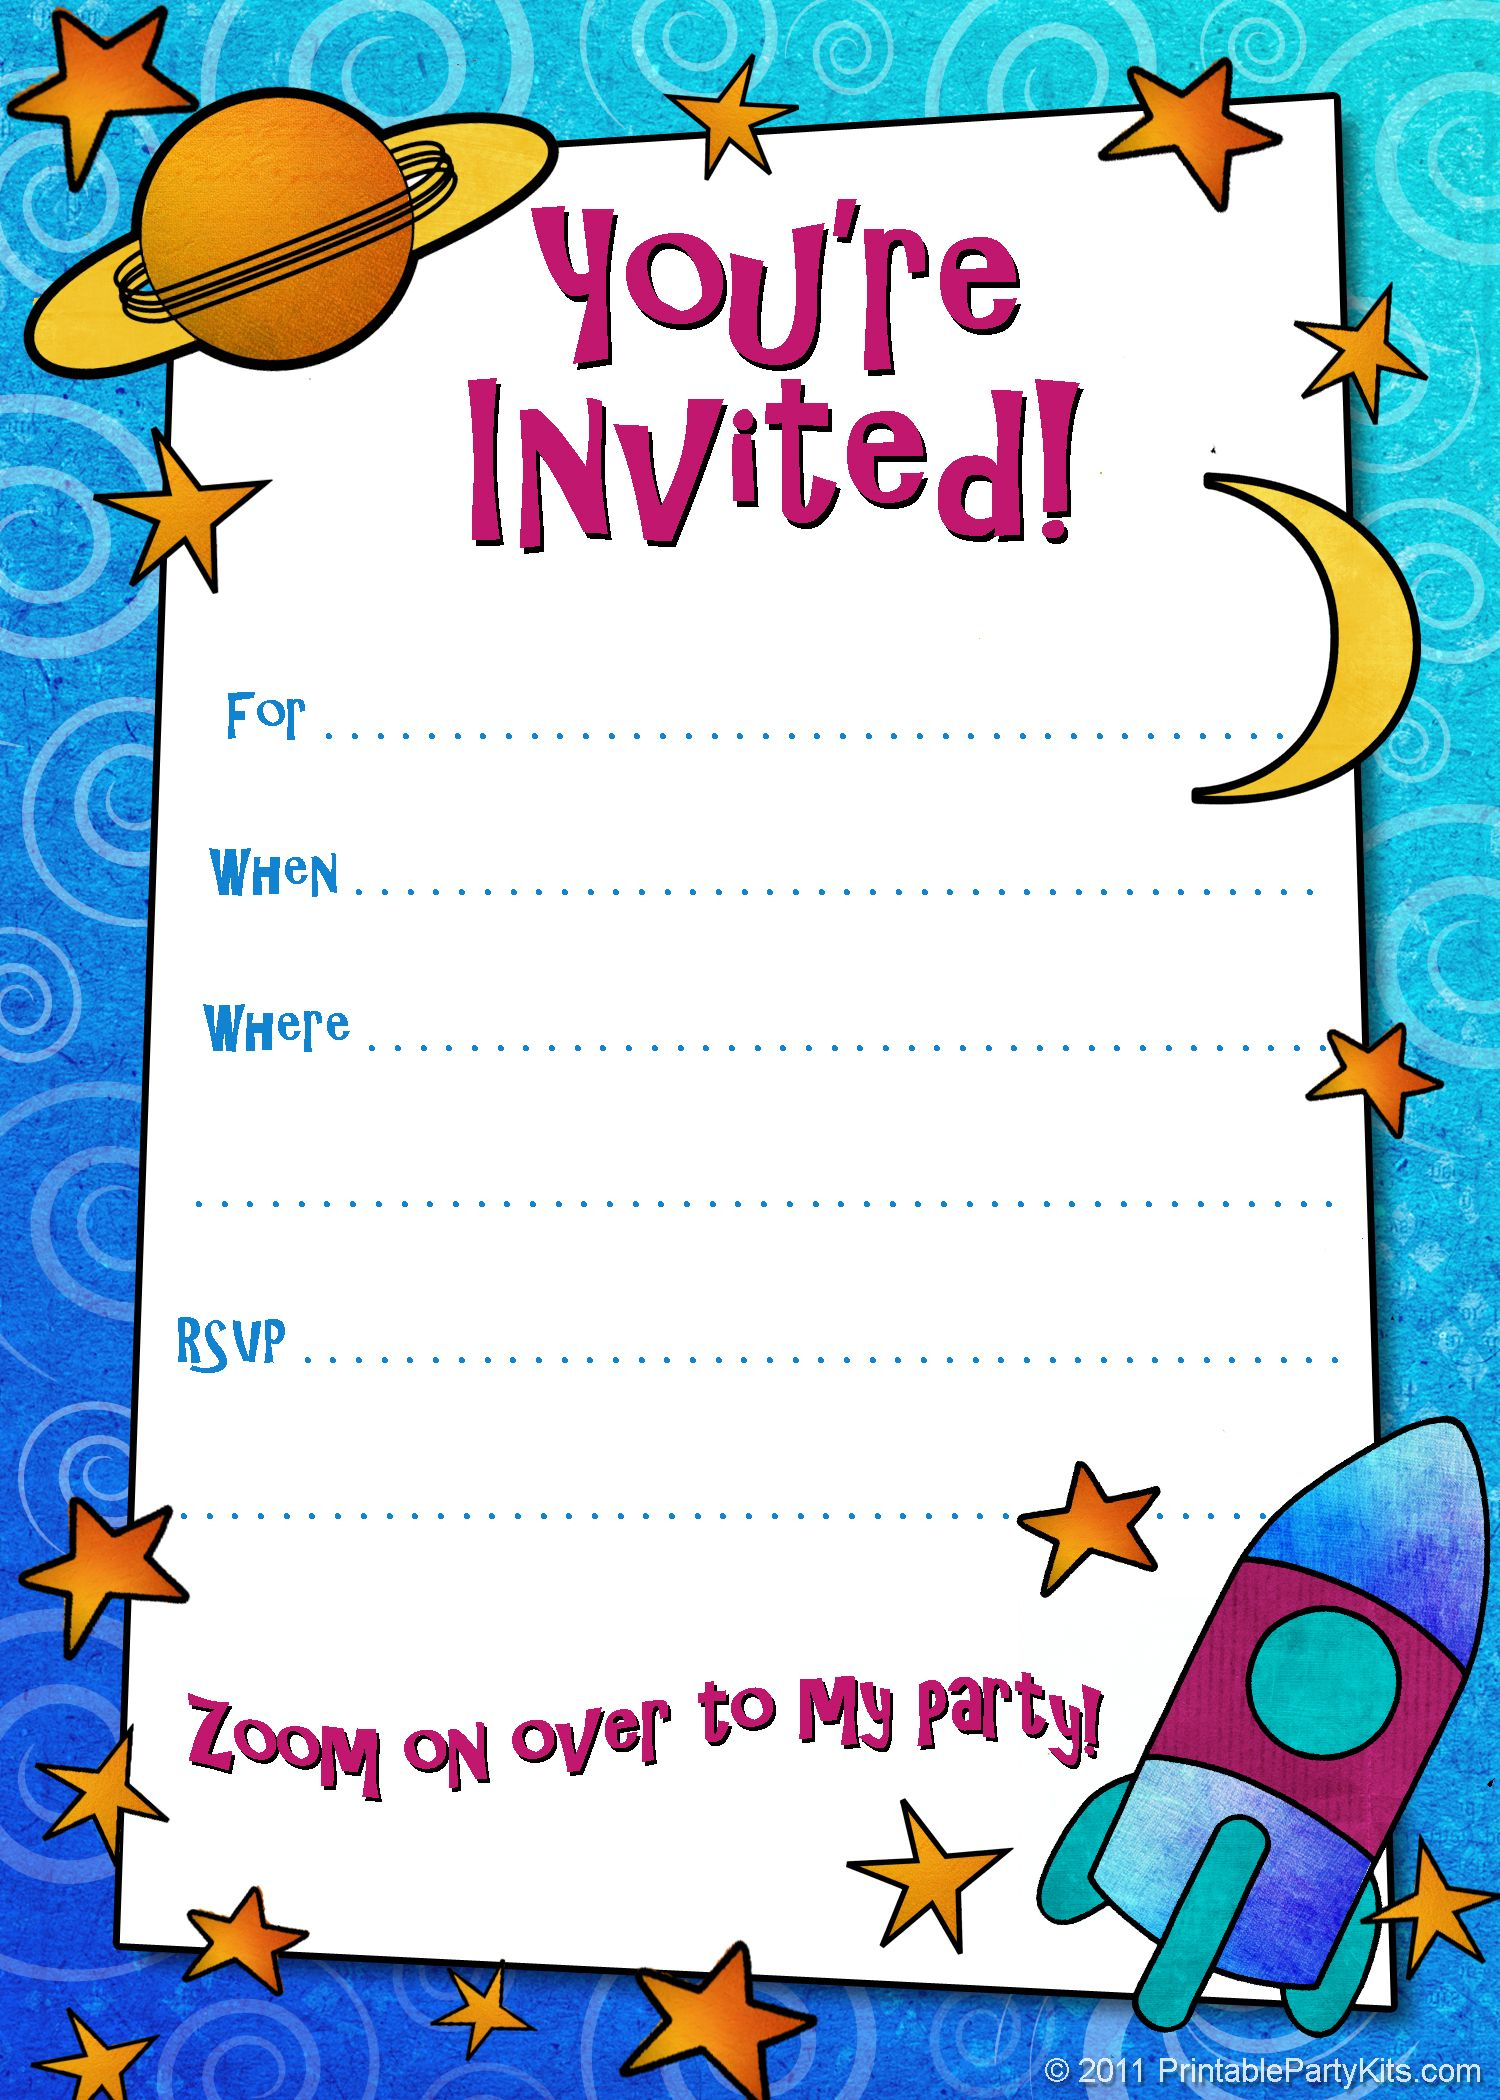 Free Printable Boys Birthday Party Invitations | Birthday Party - Free Printable Birthday Party Invitations With Photo